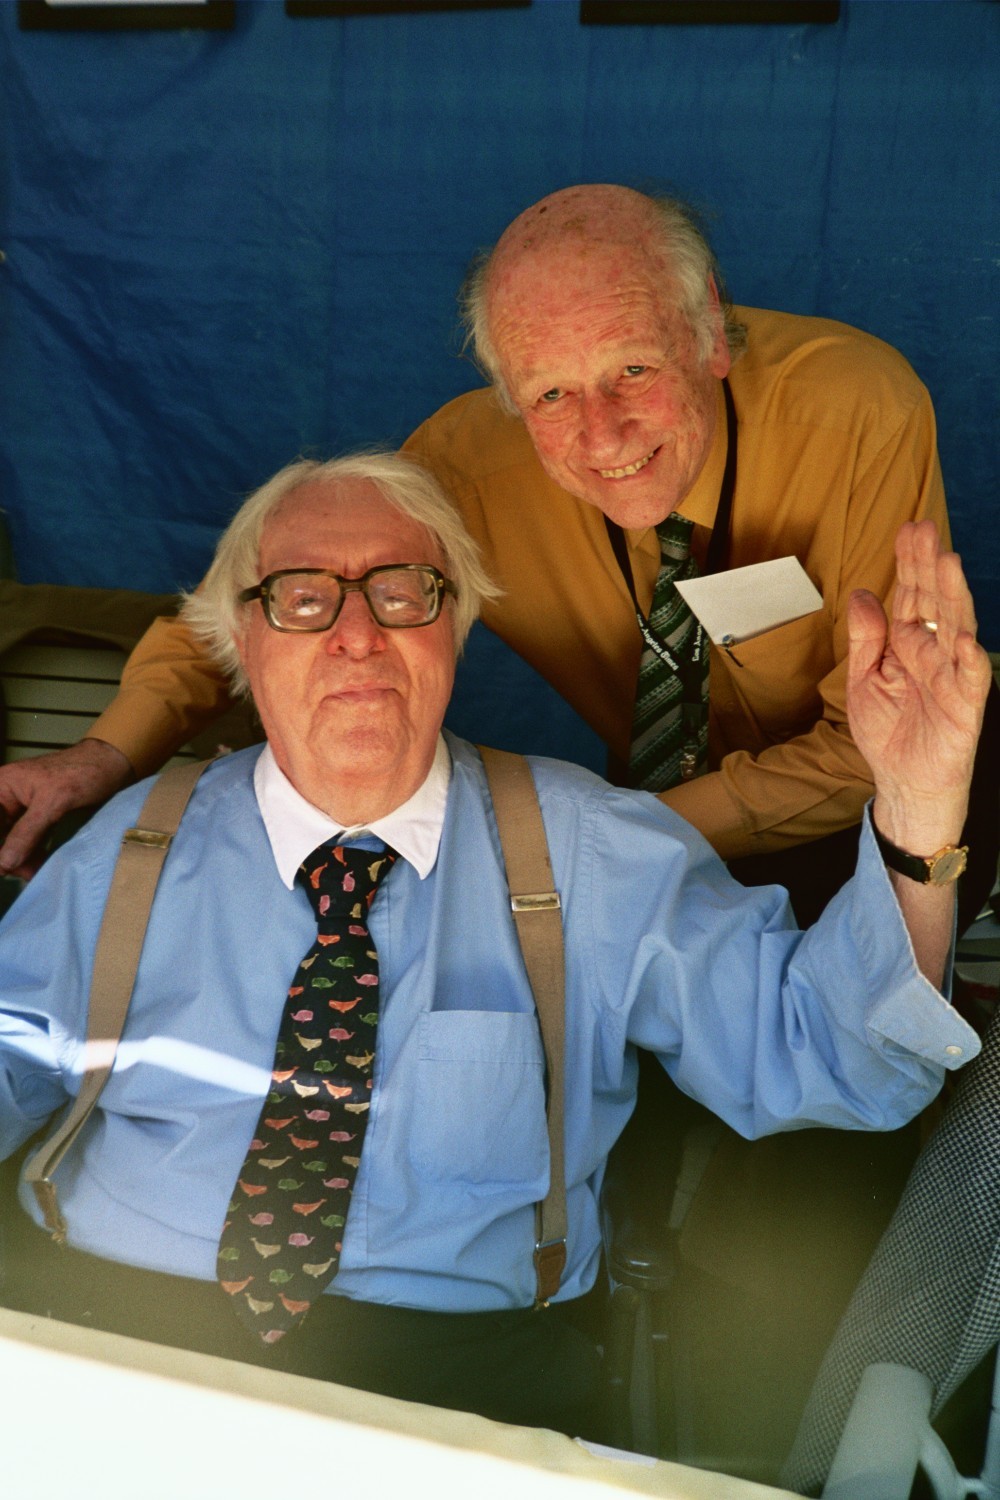 Ray Bradbury and Ray Harryhausen at UCLA's Festival of Books - 2004